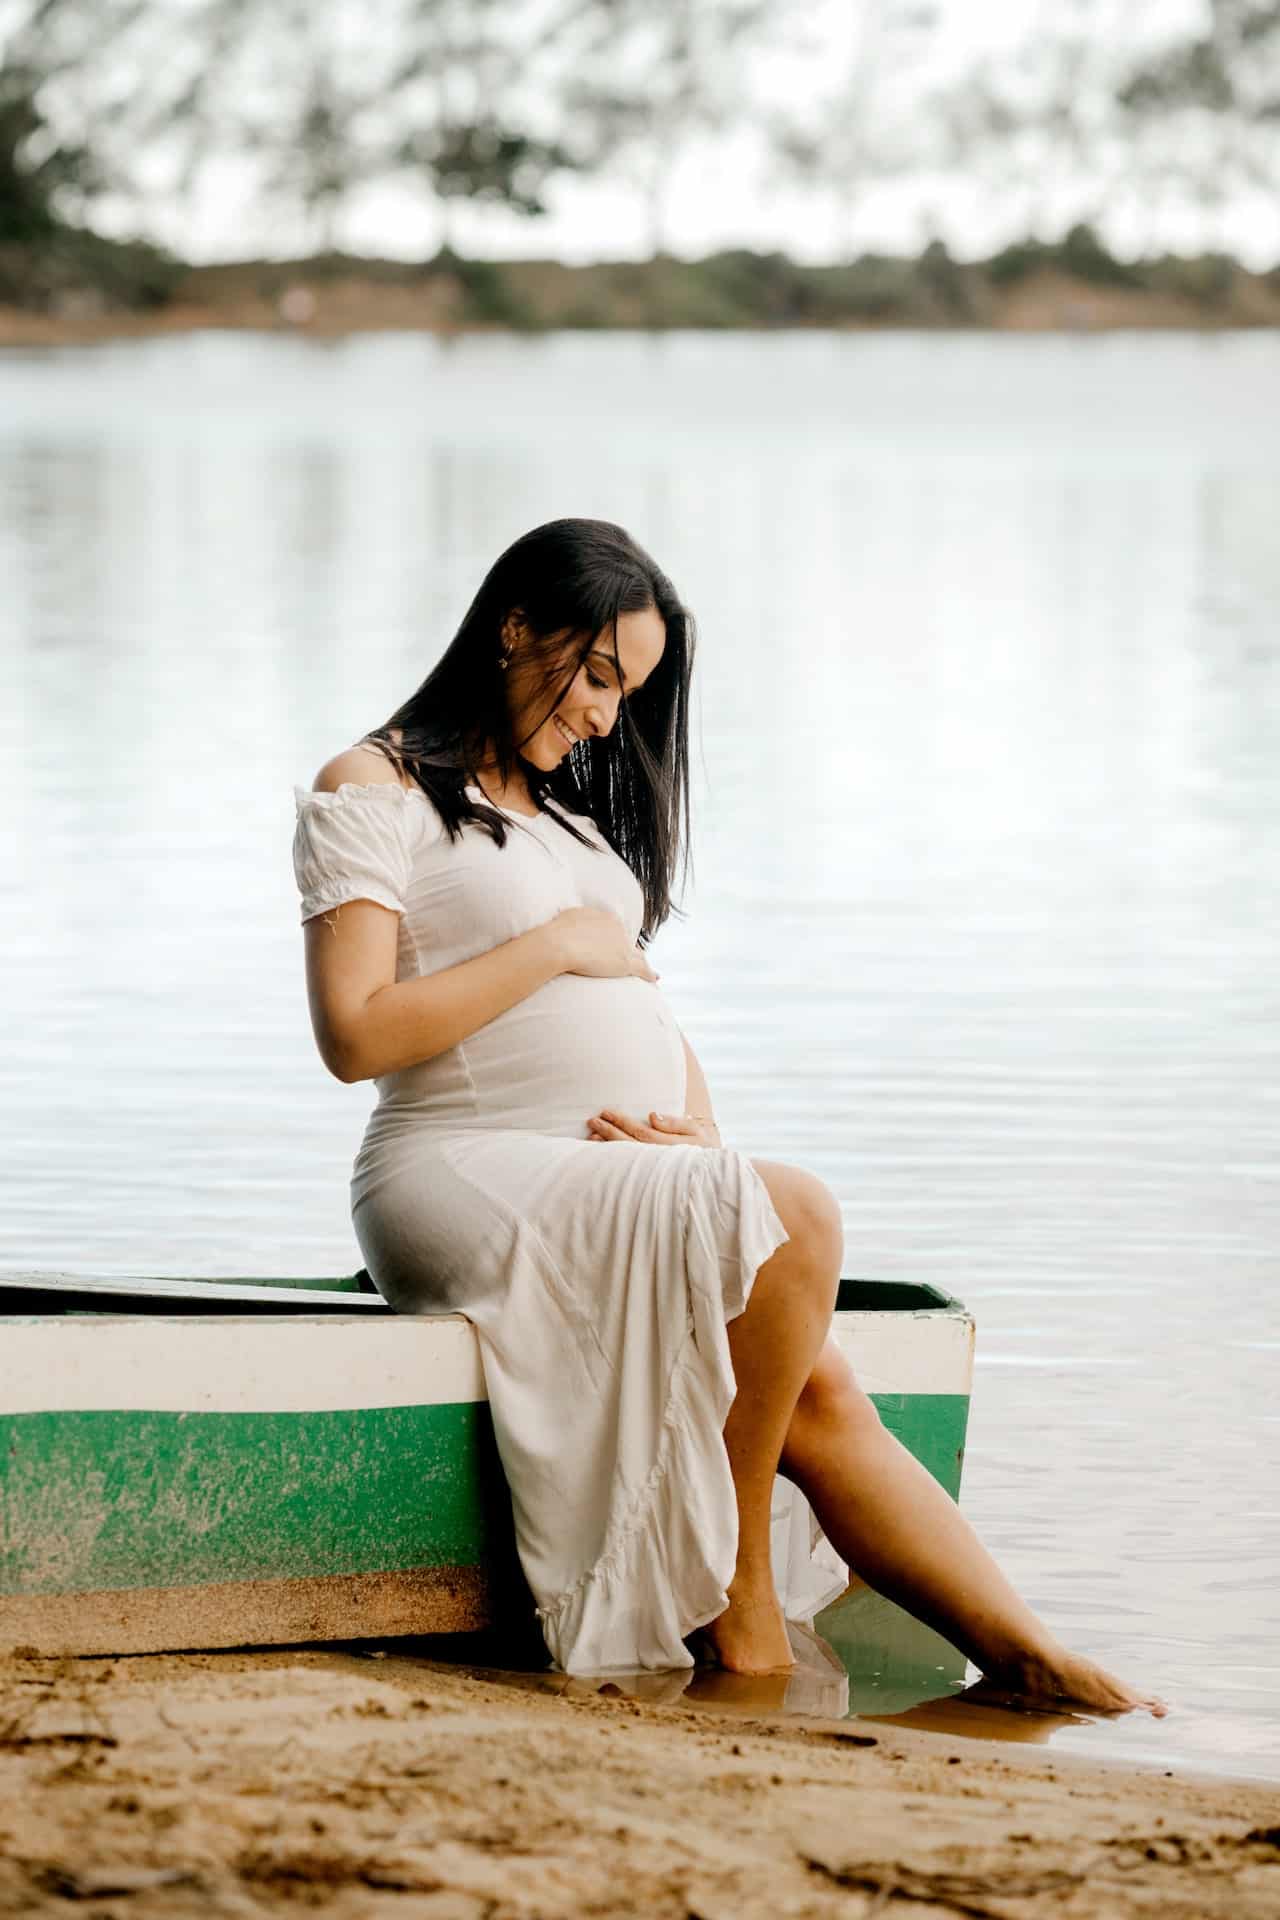 Blizanačka trudnoća simptomi